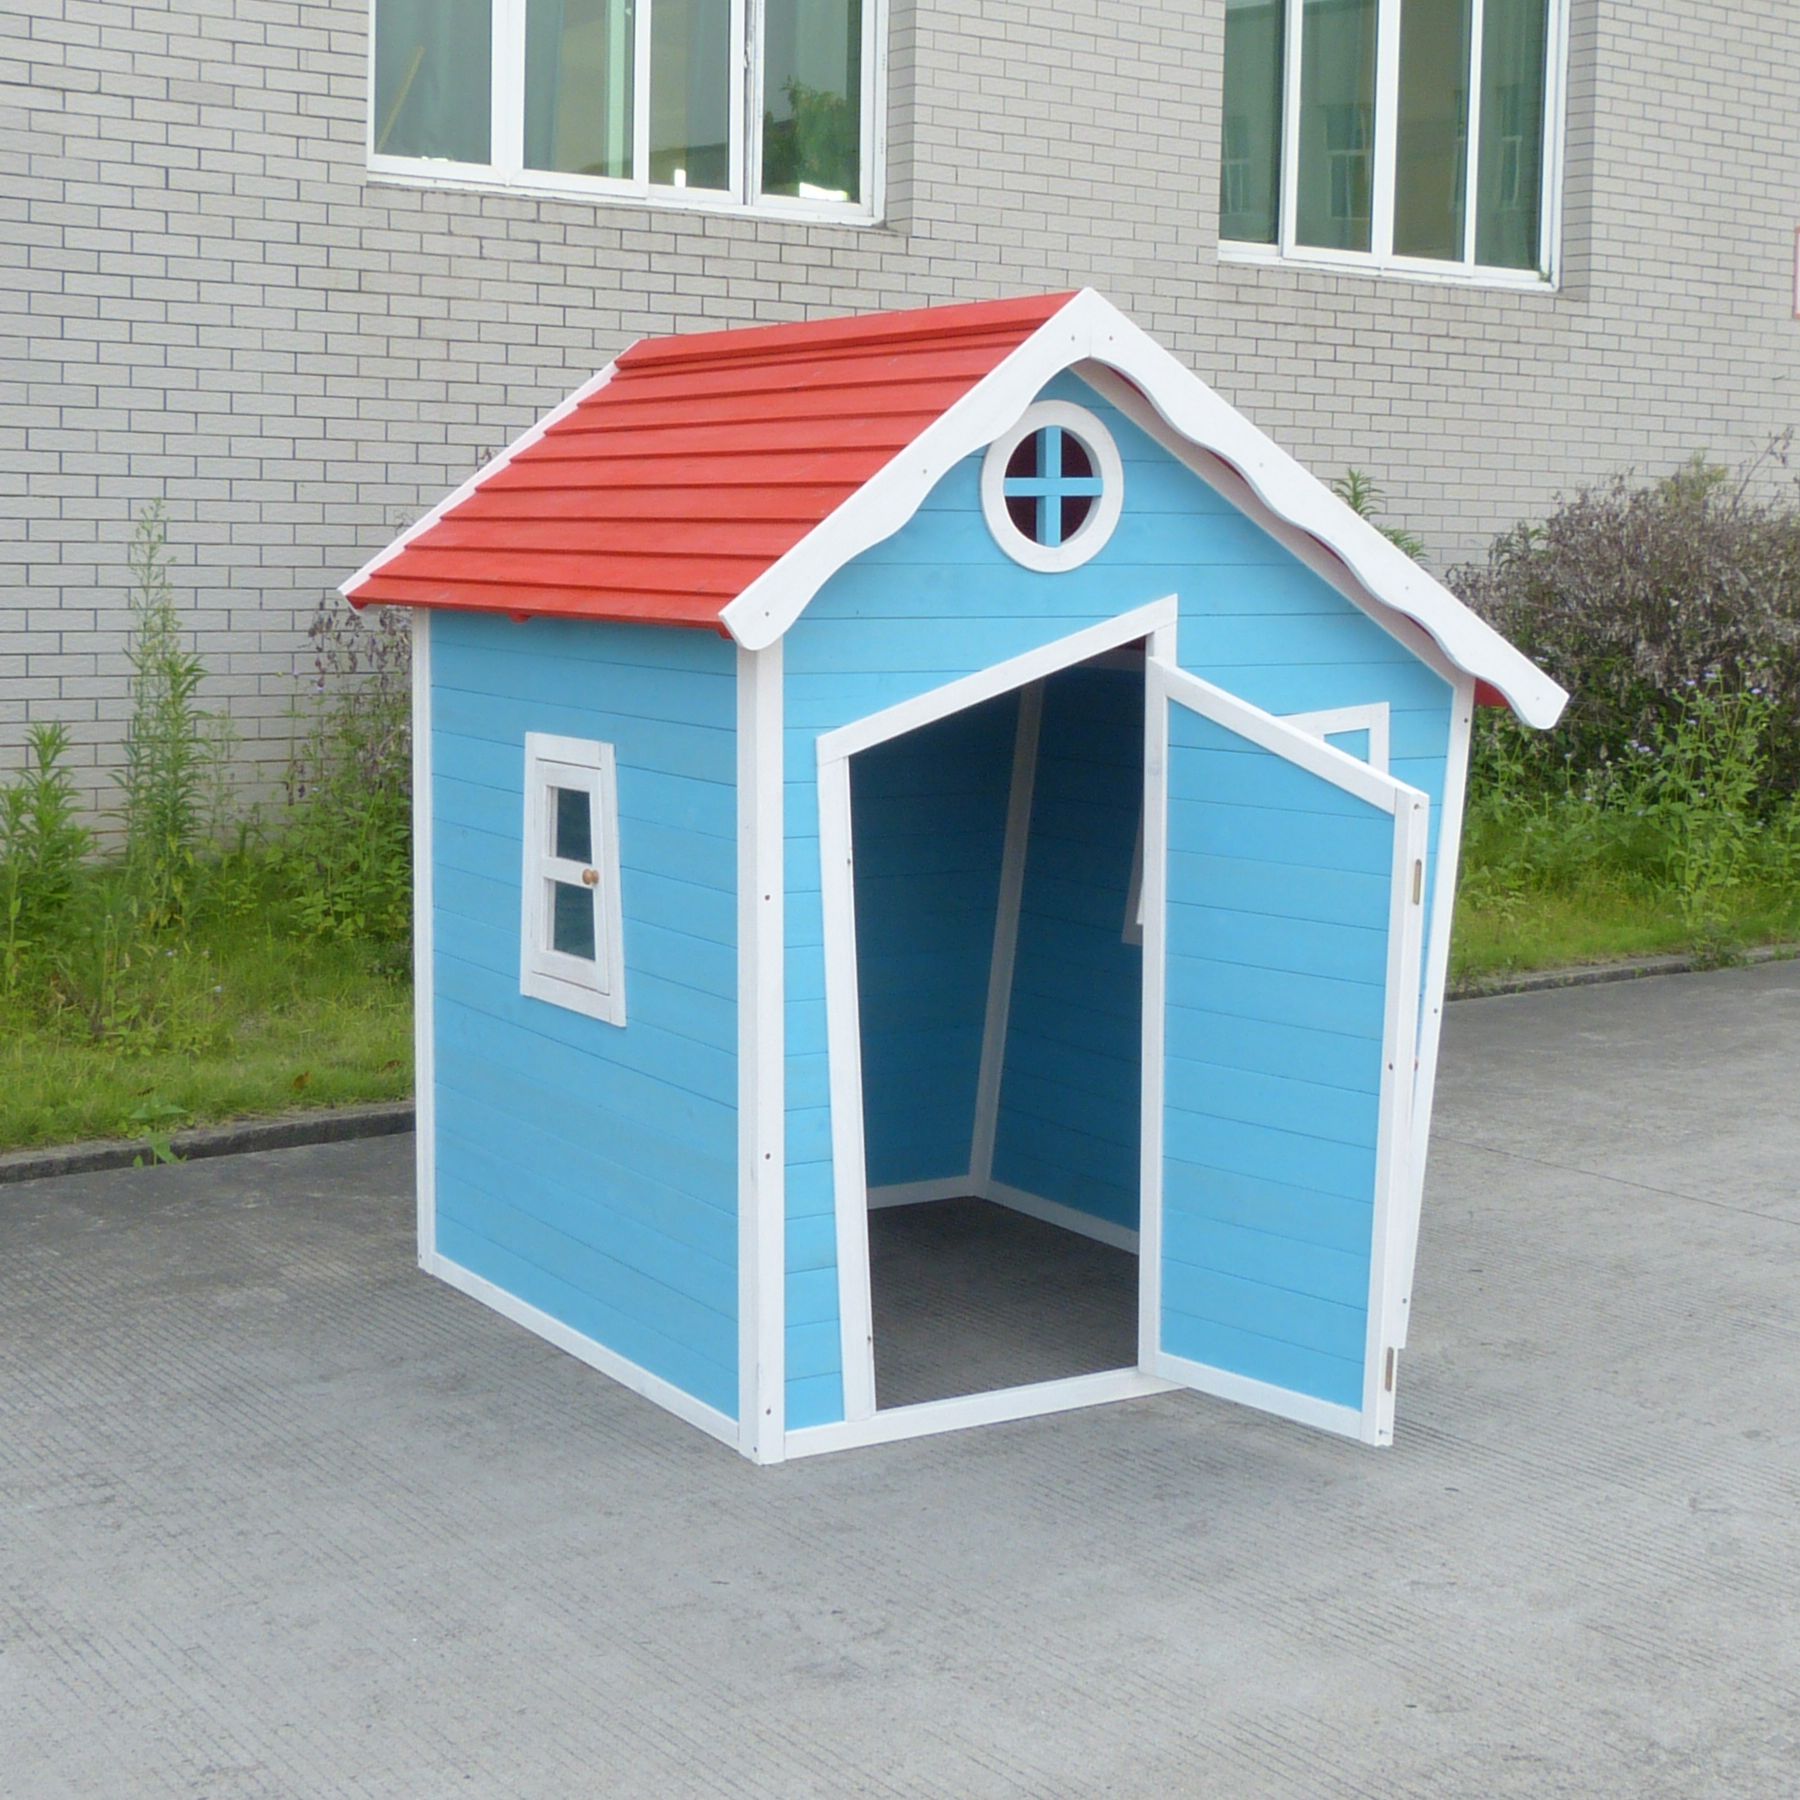 C161 playhouse